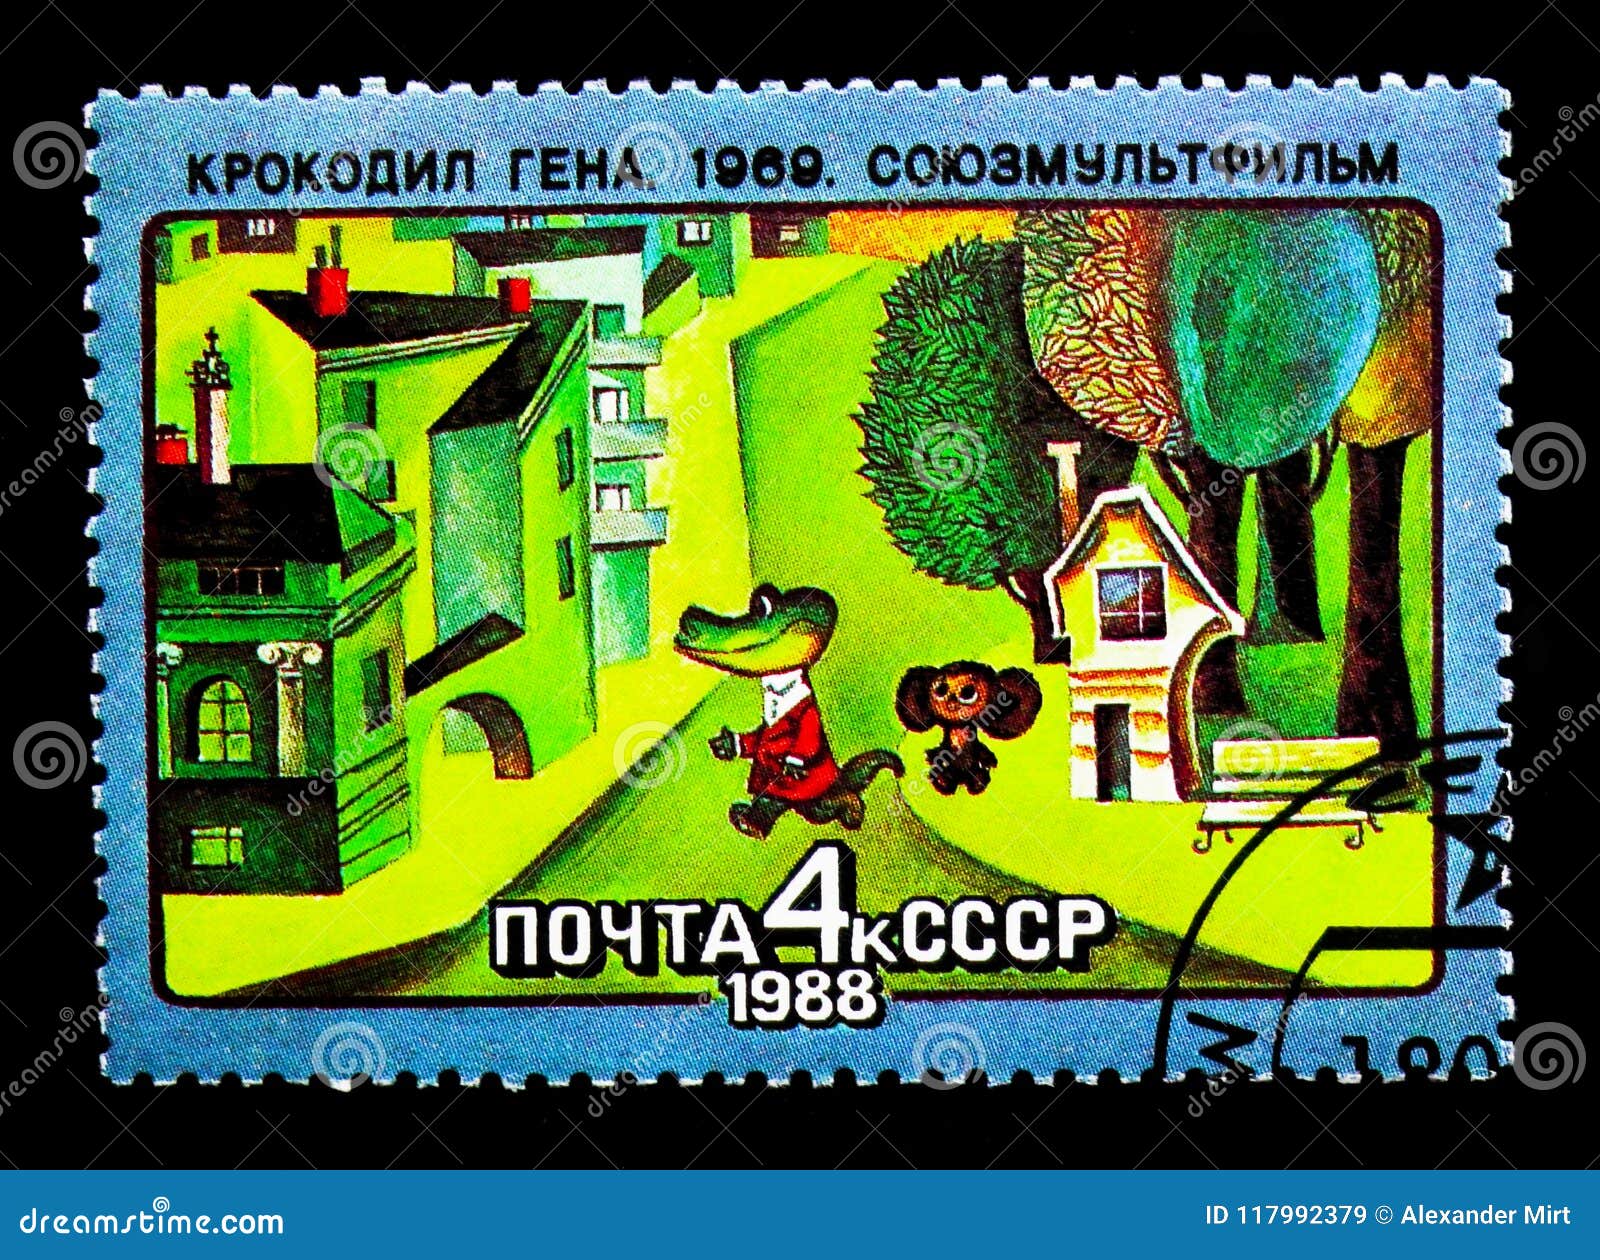 crocodile gena, soviet cartoon films serie, circa 1988